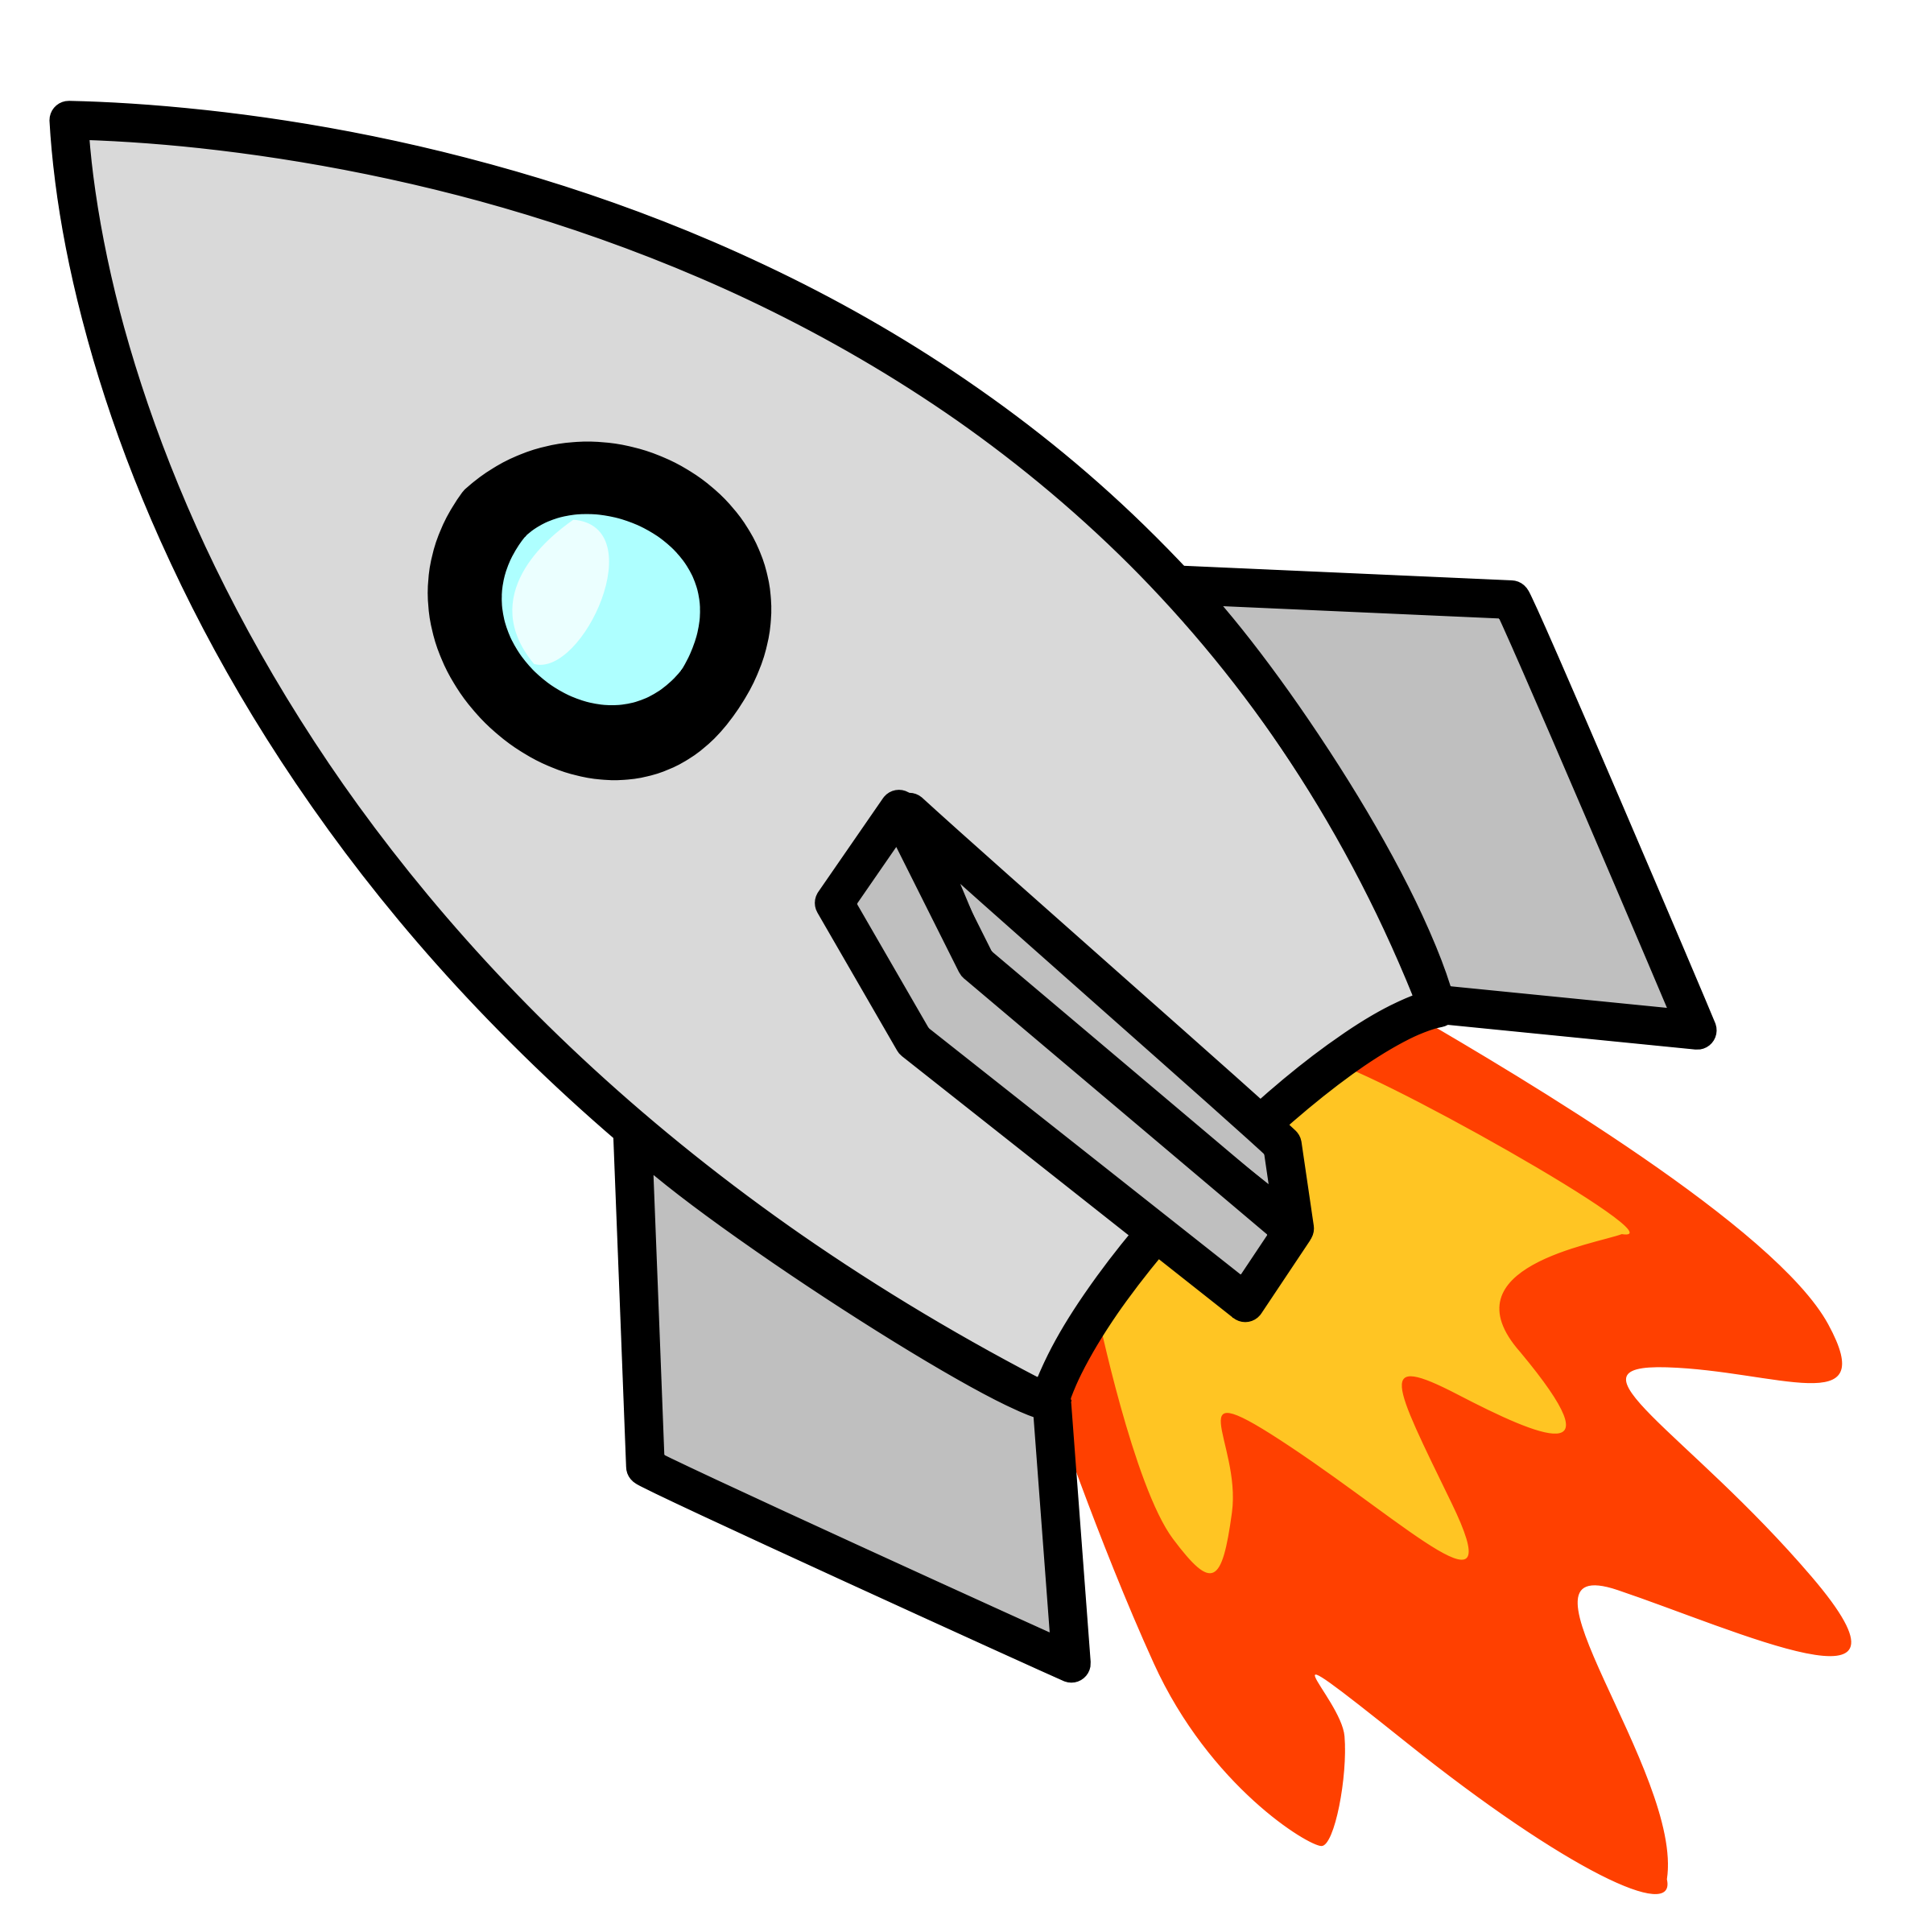 Rocketship clip art rocket sh